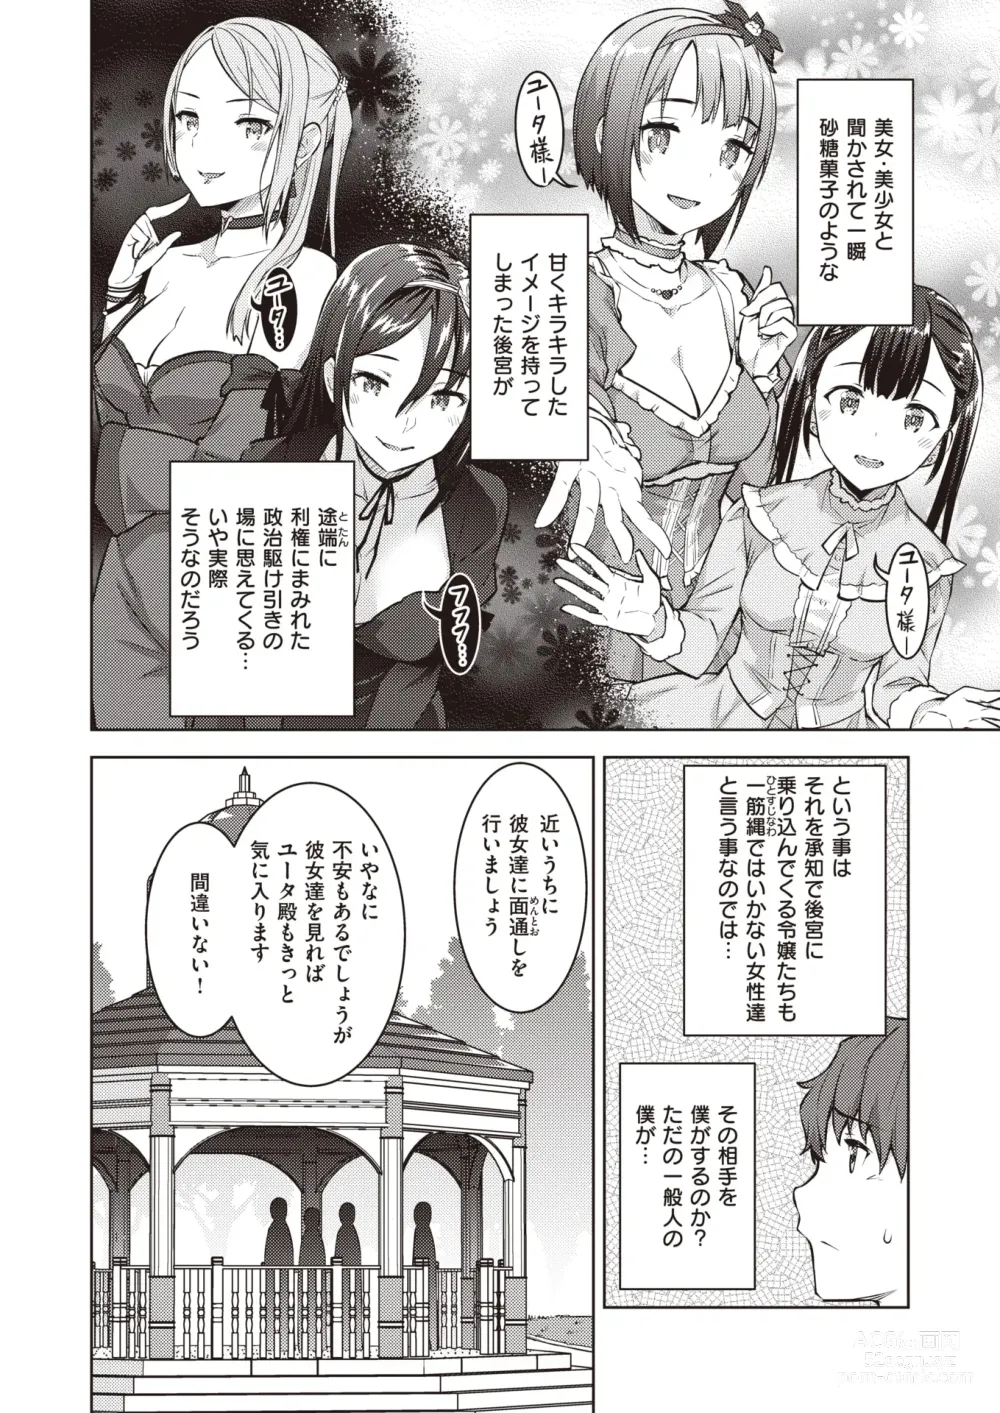 Page 53 of manga Isekai Rakuten Vol. 30